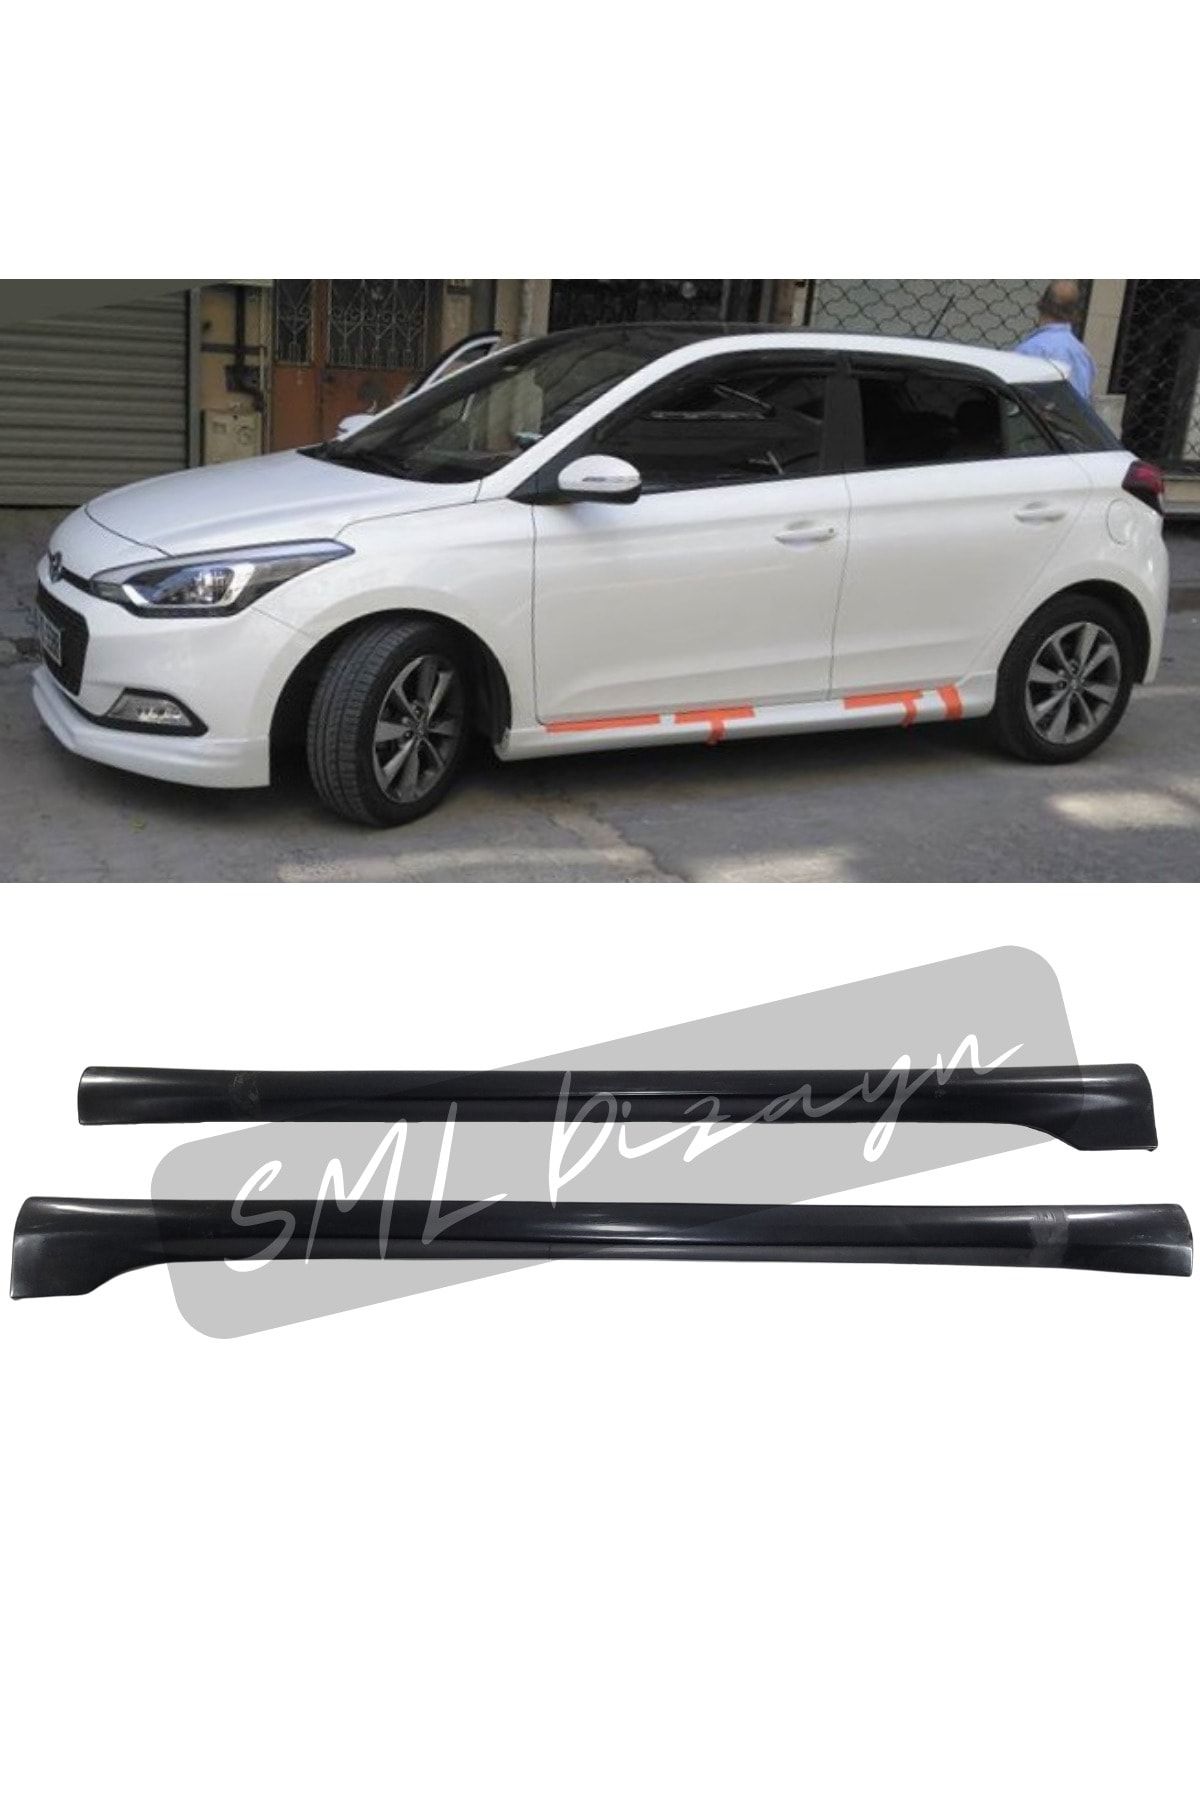 SML Dizayn Hyundai I20 (2014-2018) Yan Marşpiyel (plastik) Boyasız I20 Yan-marşbiyel-marşbiel-ek